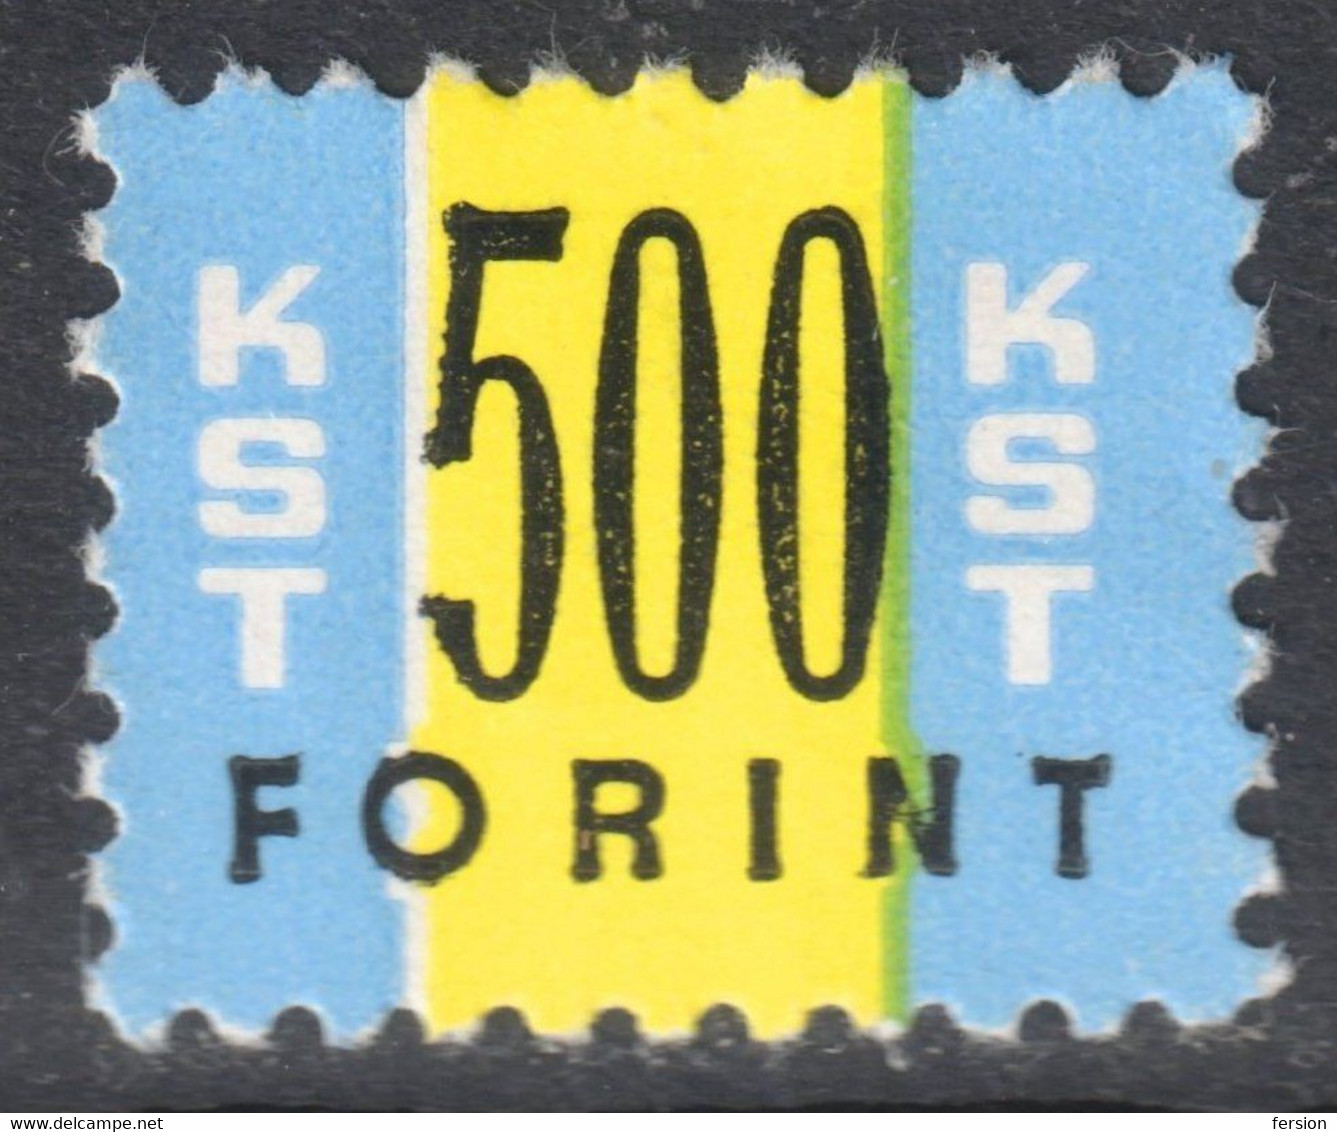 OTP KST Bank / Money Savings Stamp Vignette Label Cinderella Revenue Tax 1950's HUNGARY Kölcsönös Segítő Takarékpénztár - Revenue Stamps